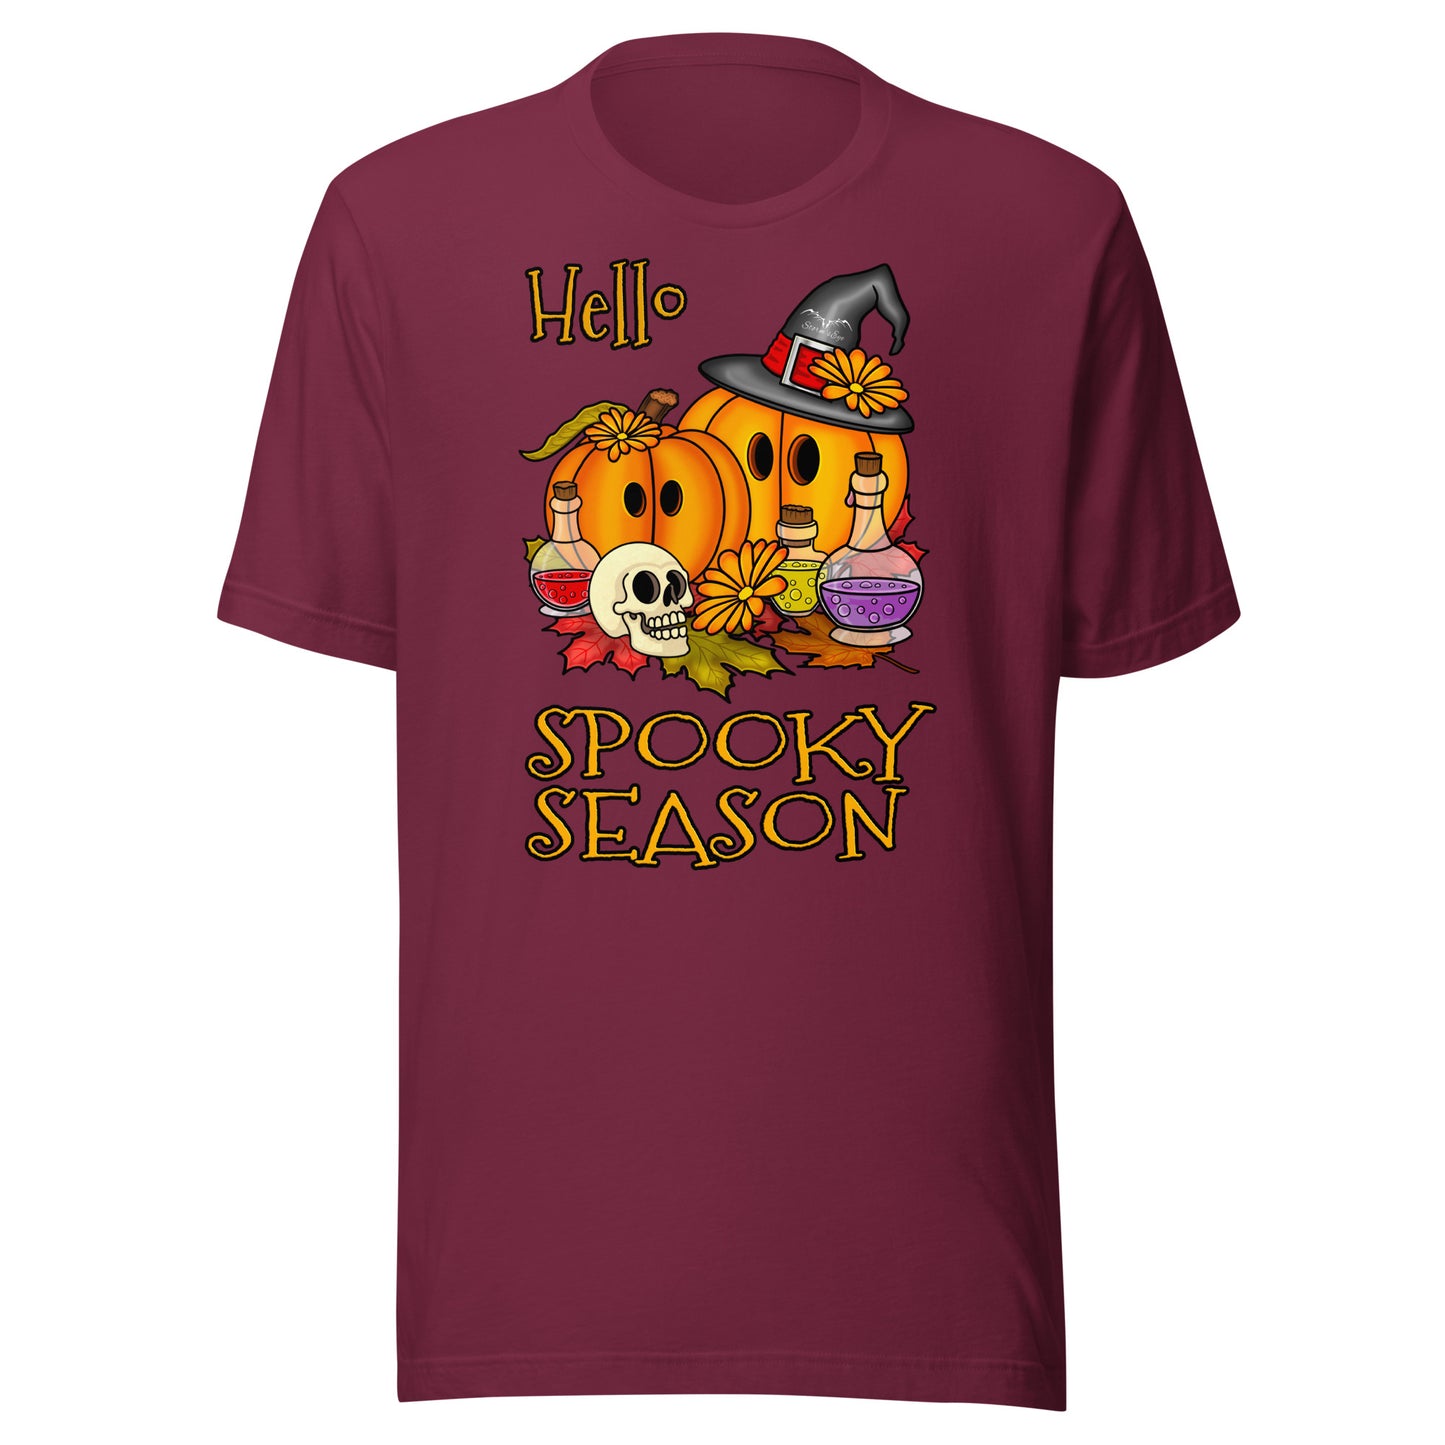 stormseye design hello spooky season halloween T shirt flat view maroon red